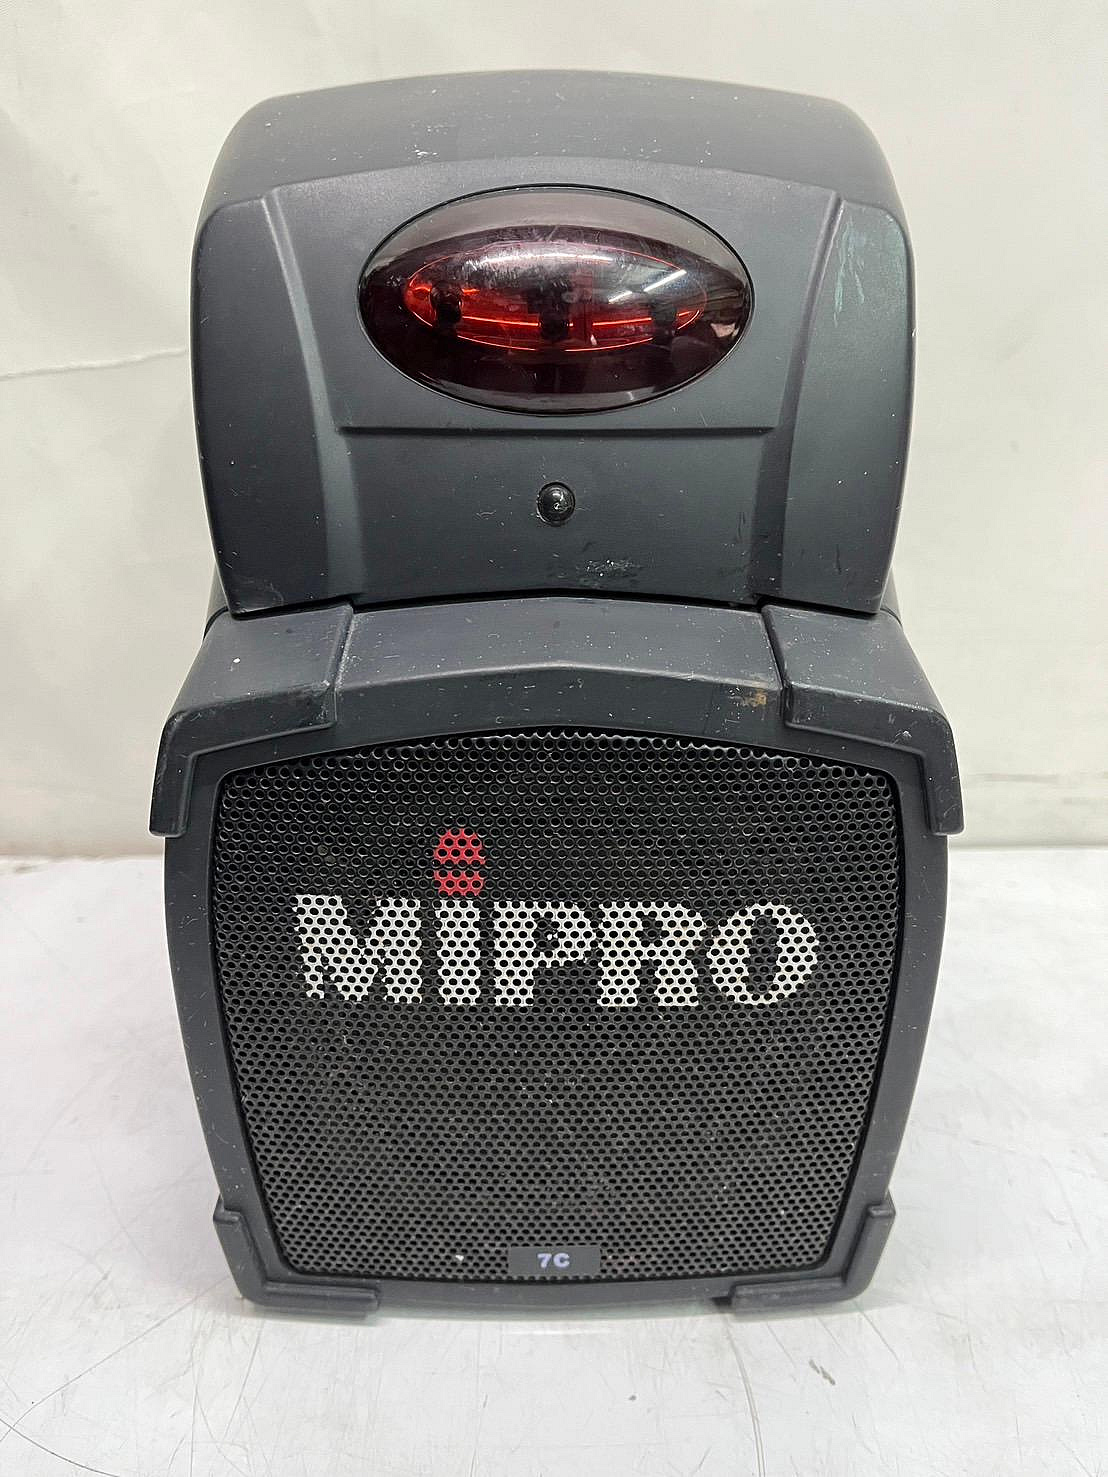 L【小米二店】二手 MA-101ACT MIPRO 45W UHF無線教學擴音機  喇叭 (沒有麥克風)